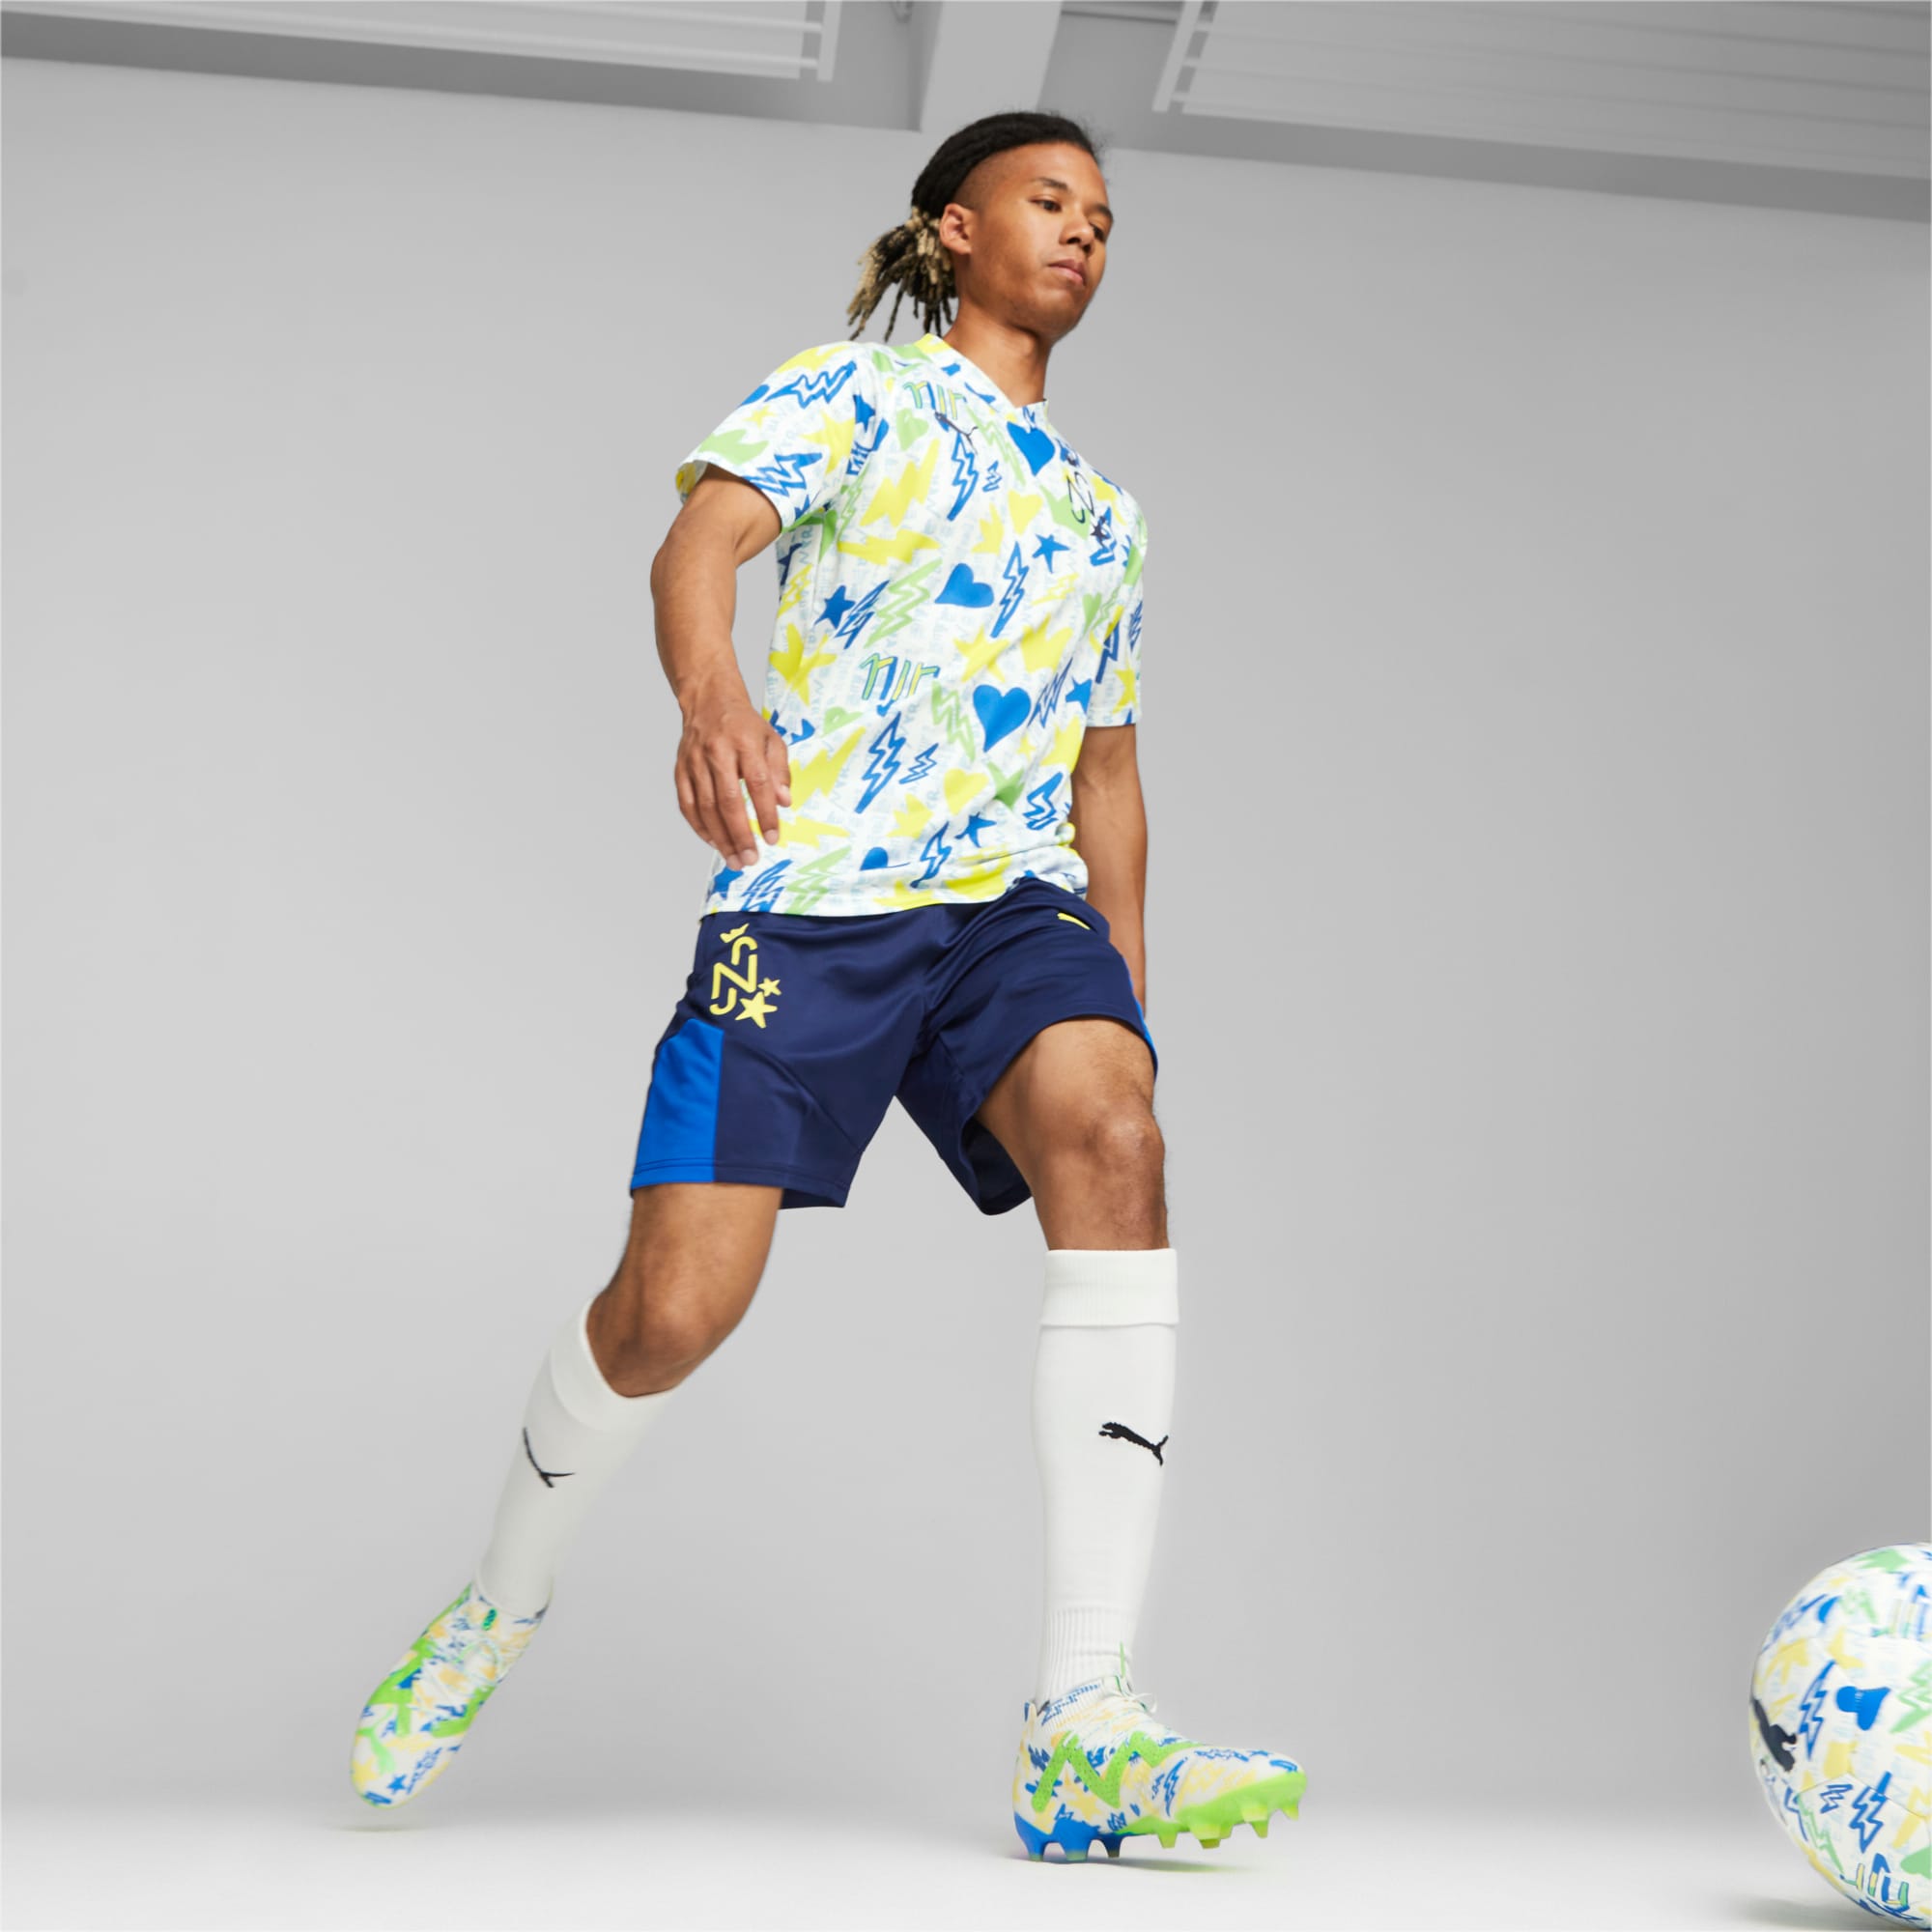 PUMA Neymar Jr Future Ultimate Creativity FG/AG Firm Ground Soccer Cleats -  White, Violet & Fluro Yellow - Soccer Master